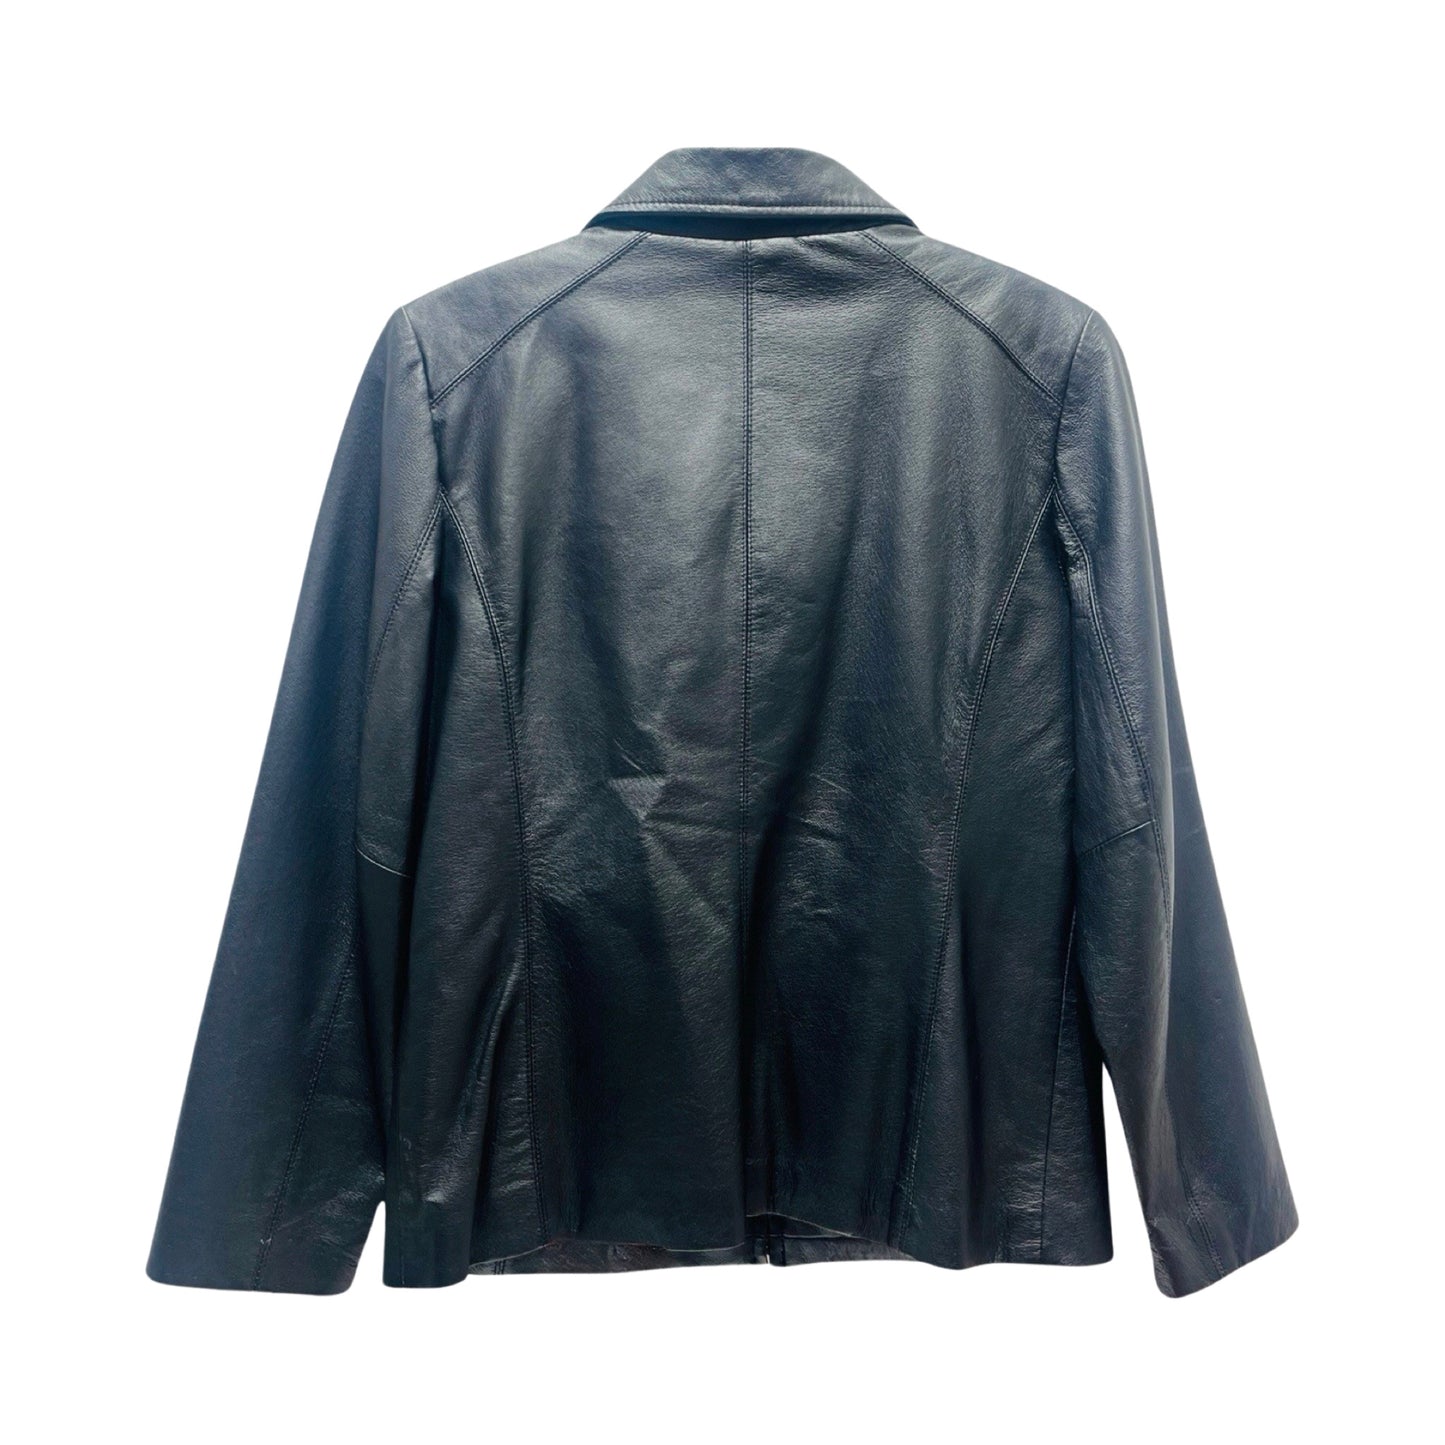 Button Up Collared Black Jacket Leather By Worthington  Size: Petite  Medium